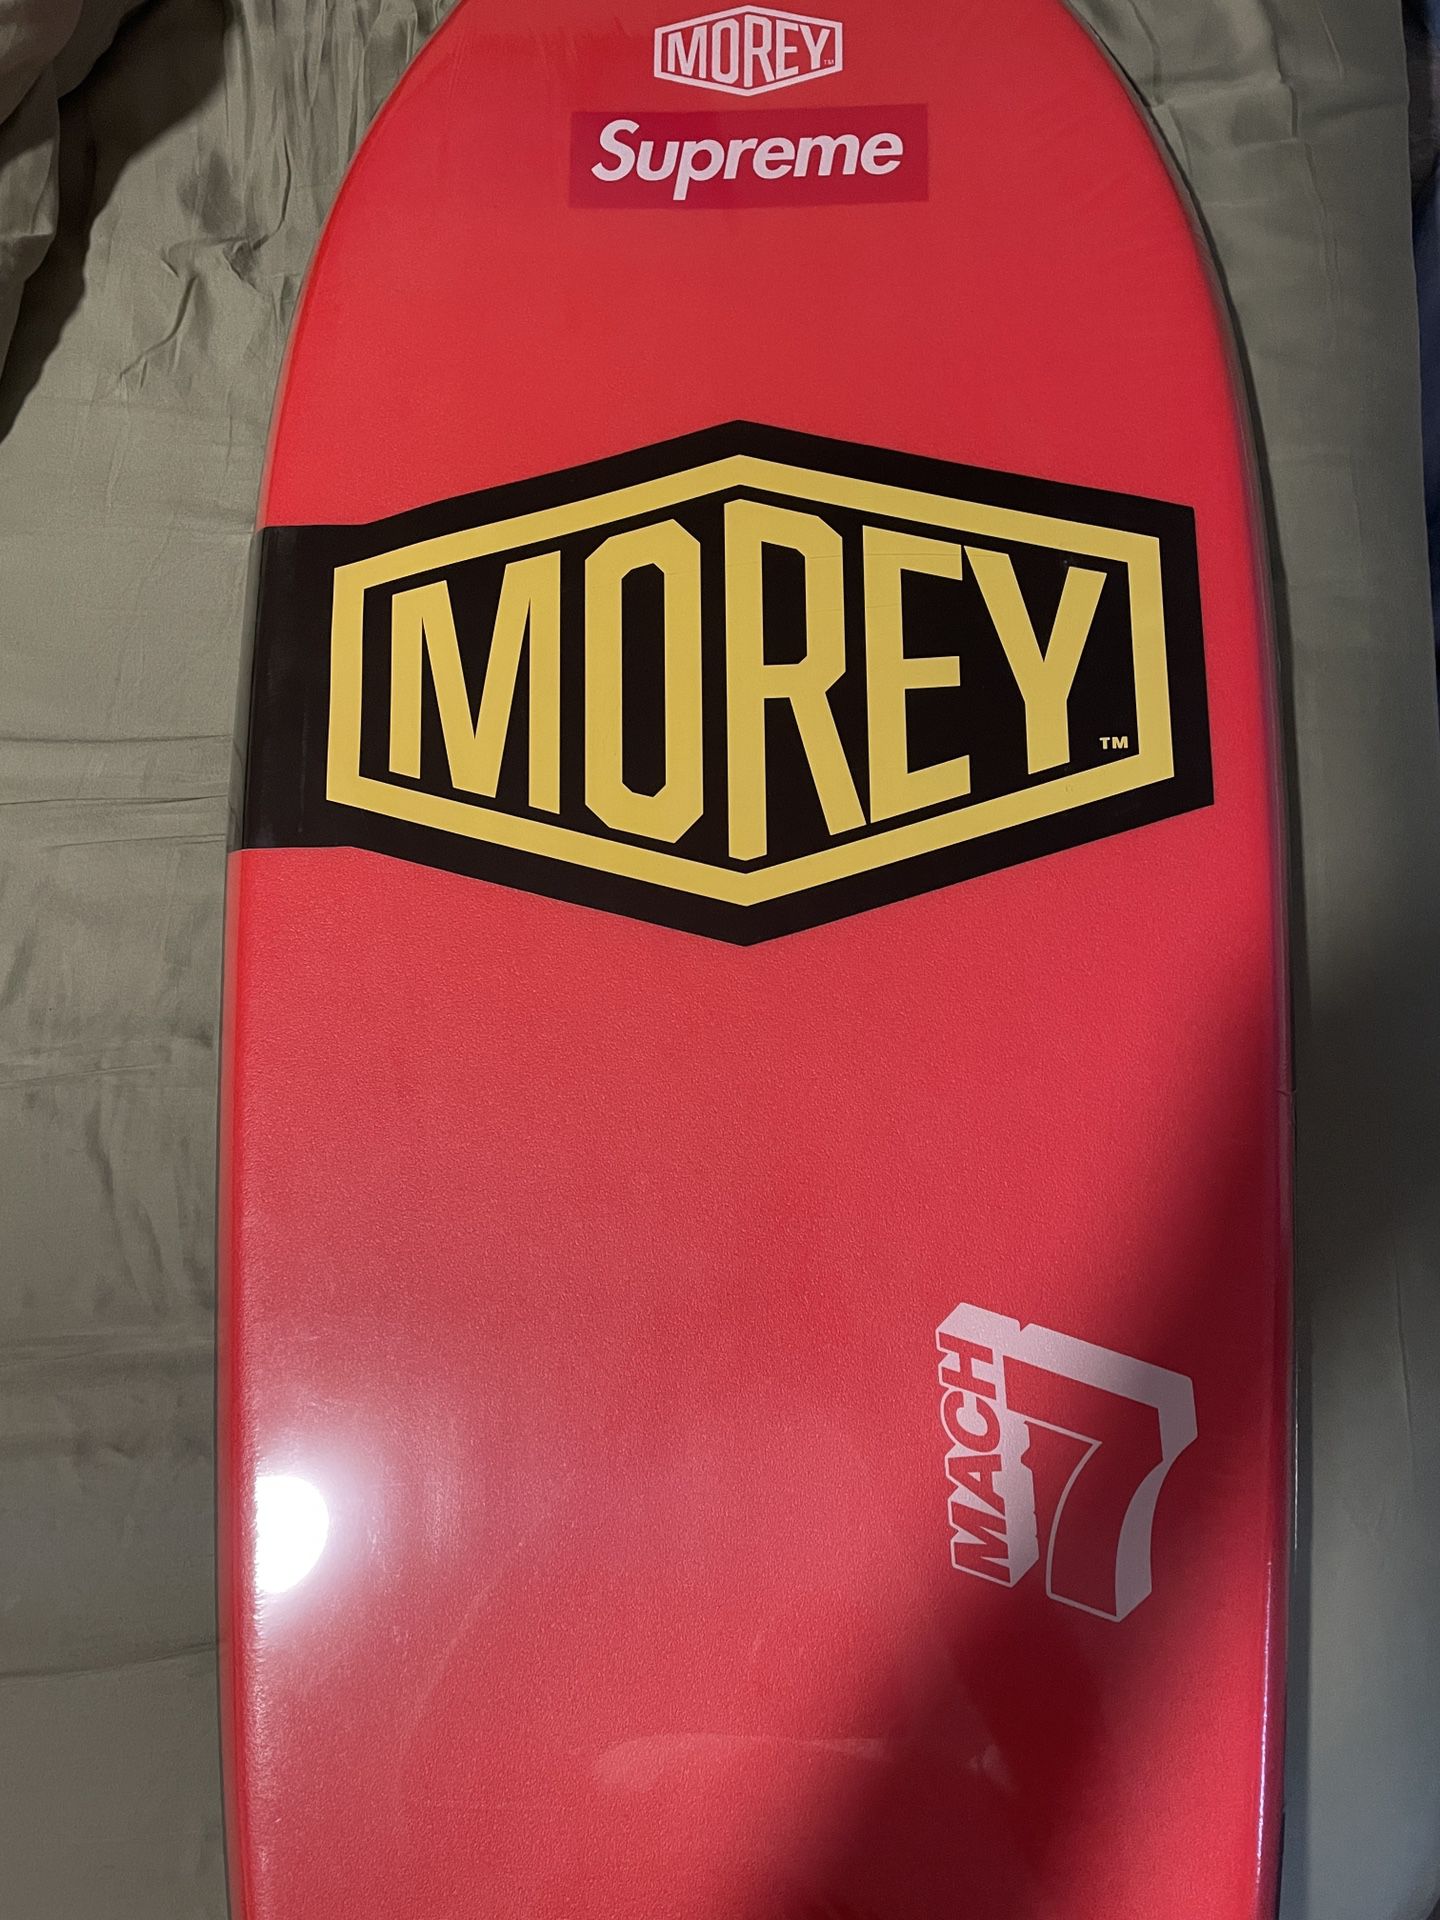 Supreme Morey Mach 7 42” Bodyboard for Sale in Lake Forest, CA